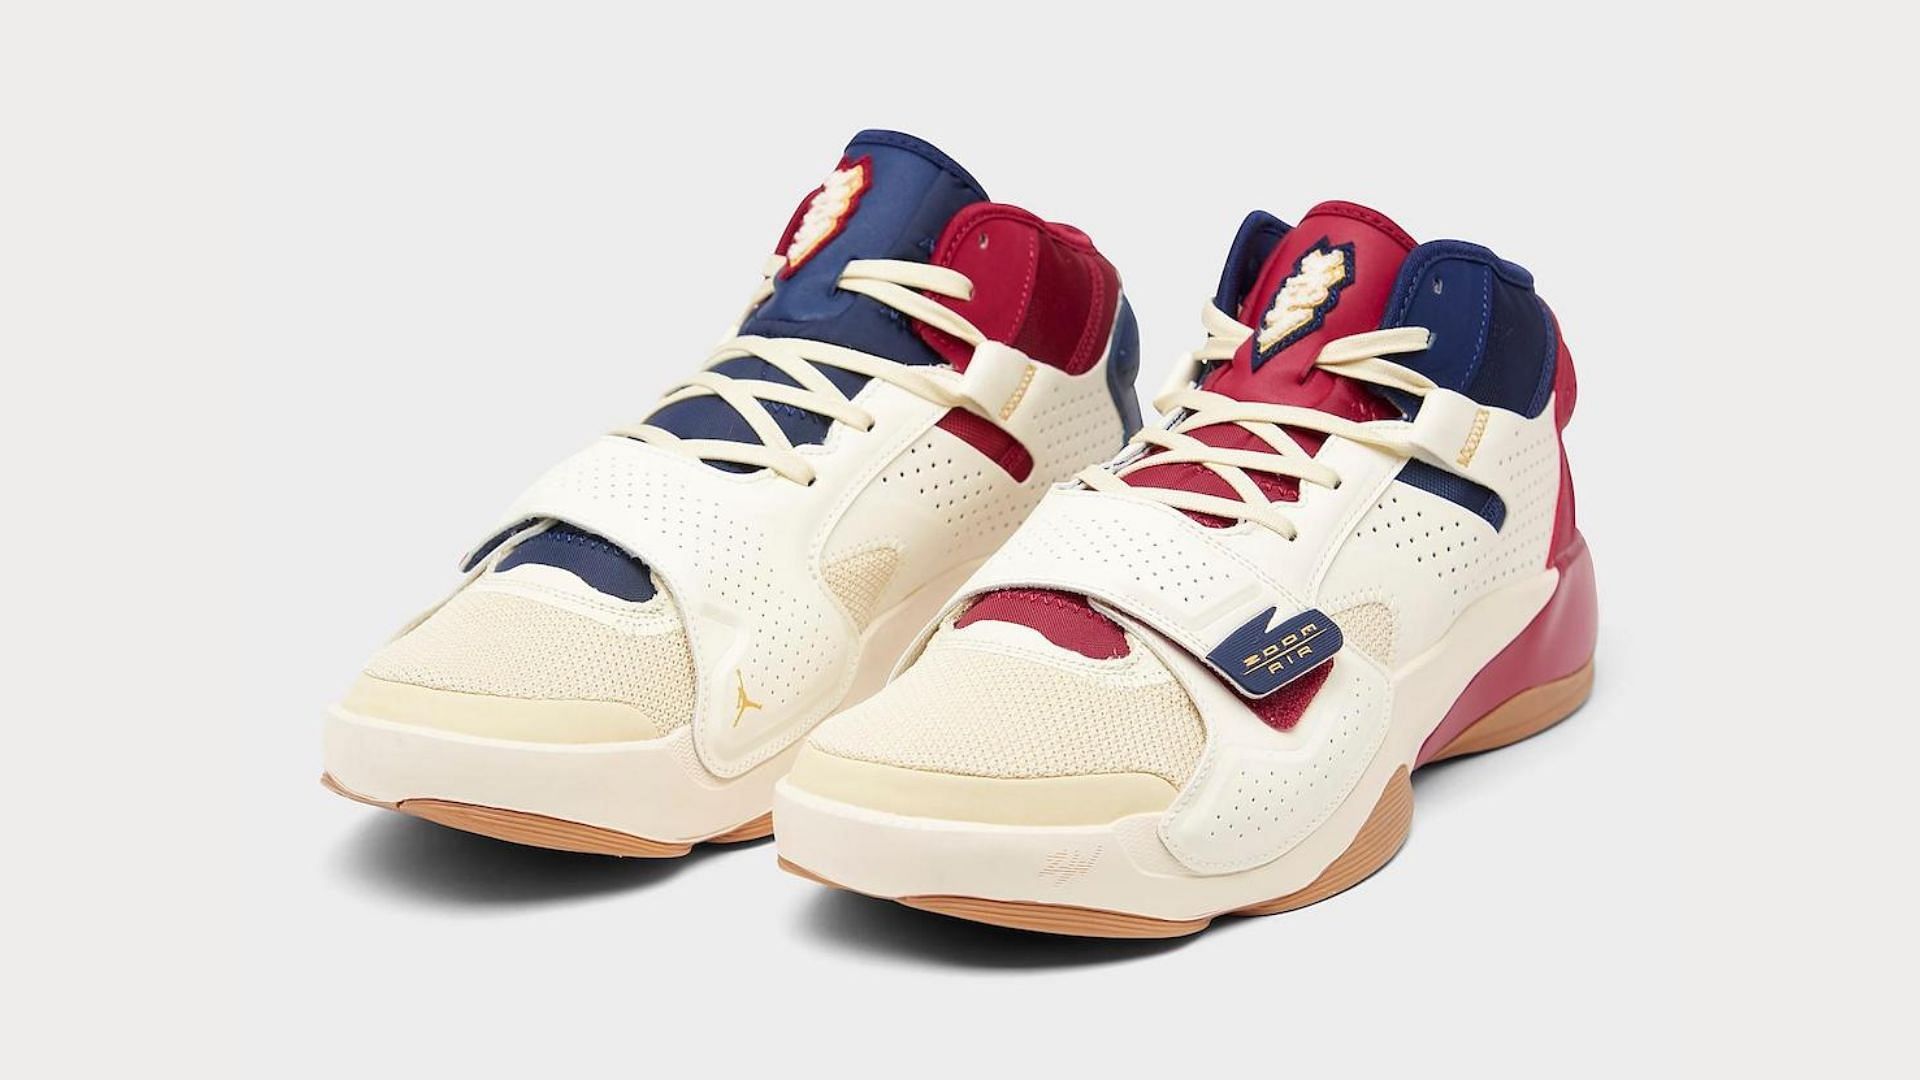 Jordan Zion 2 Pelicans colorway (Image via Nike)